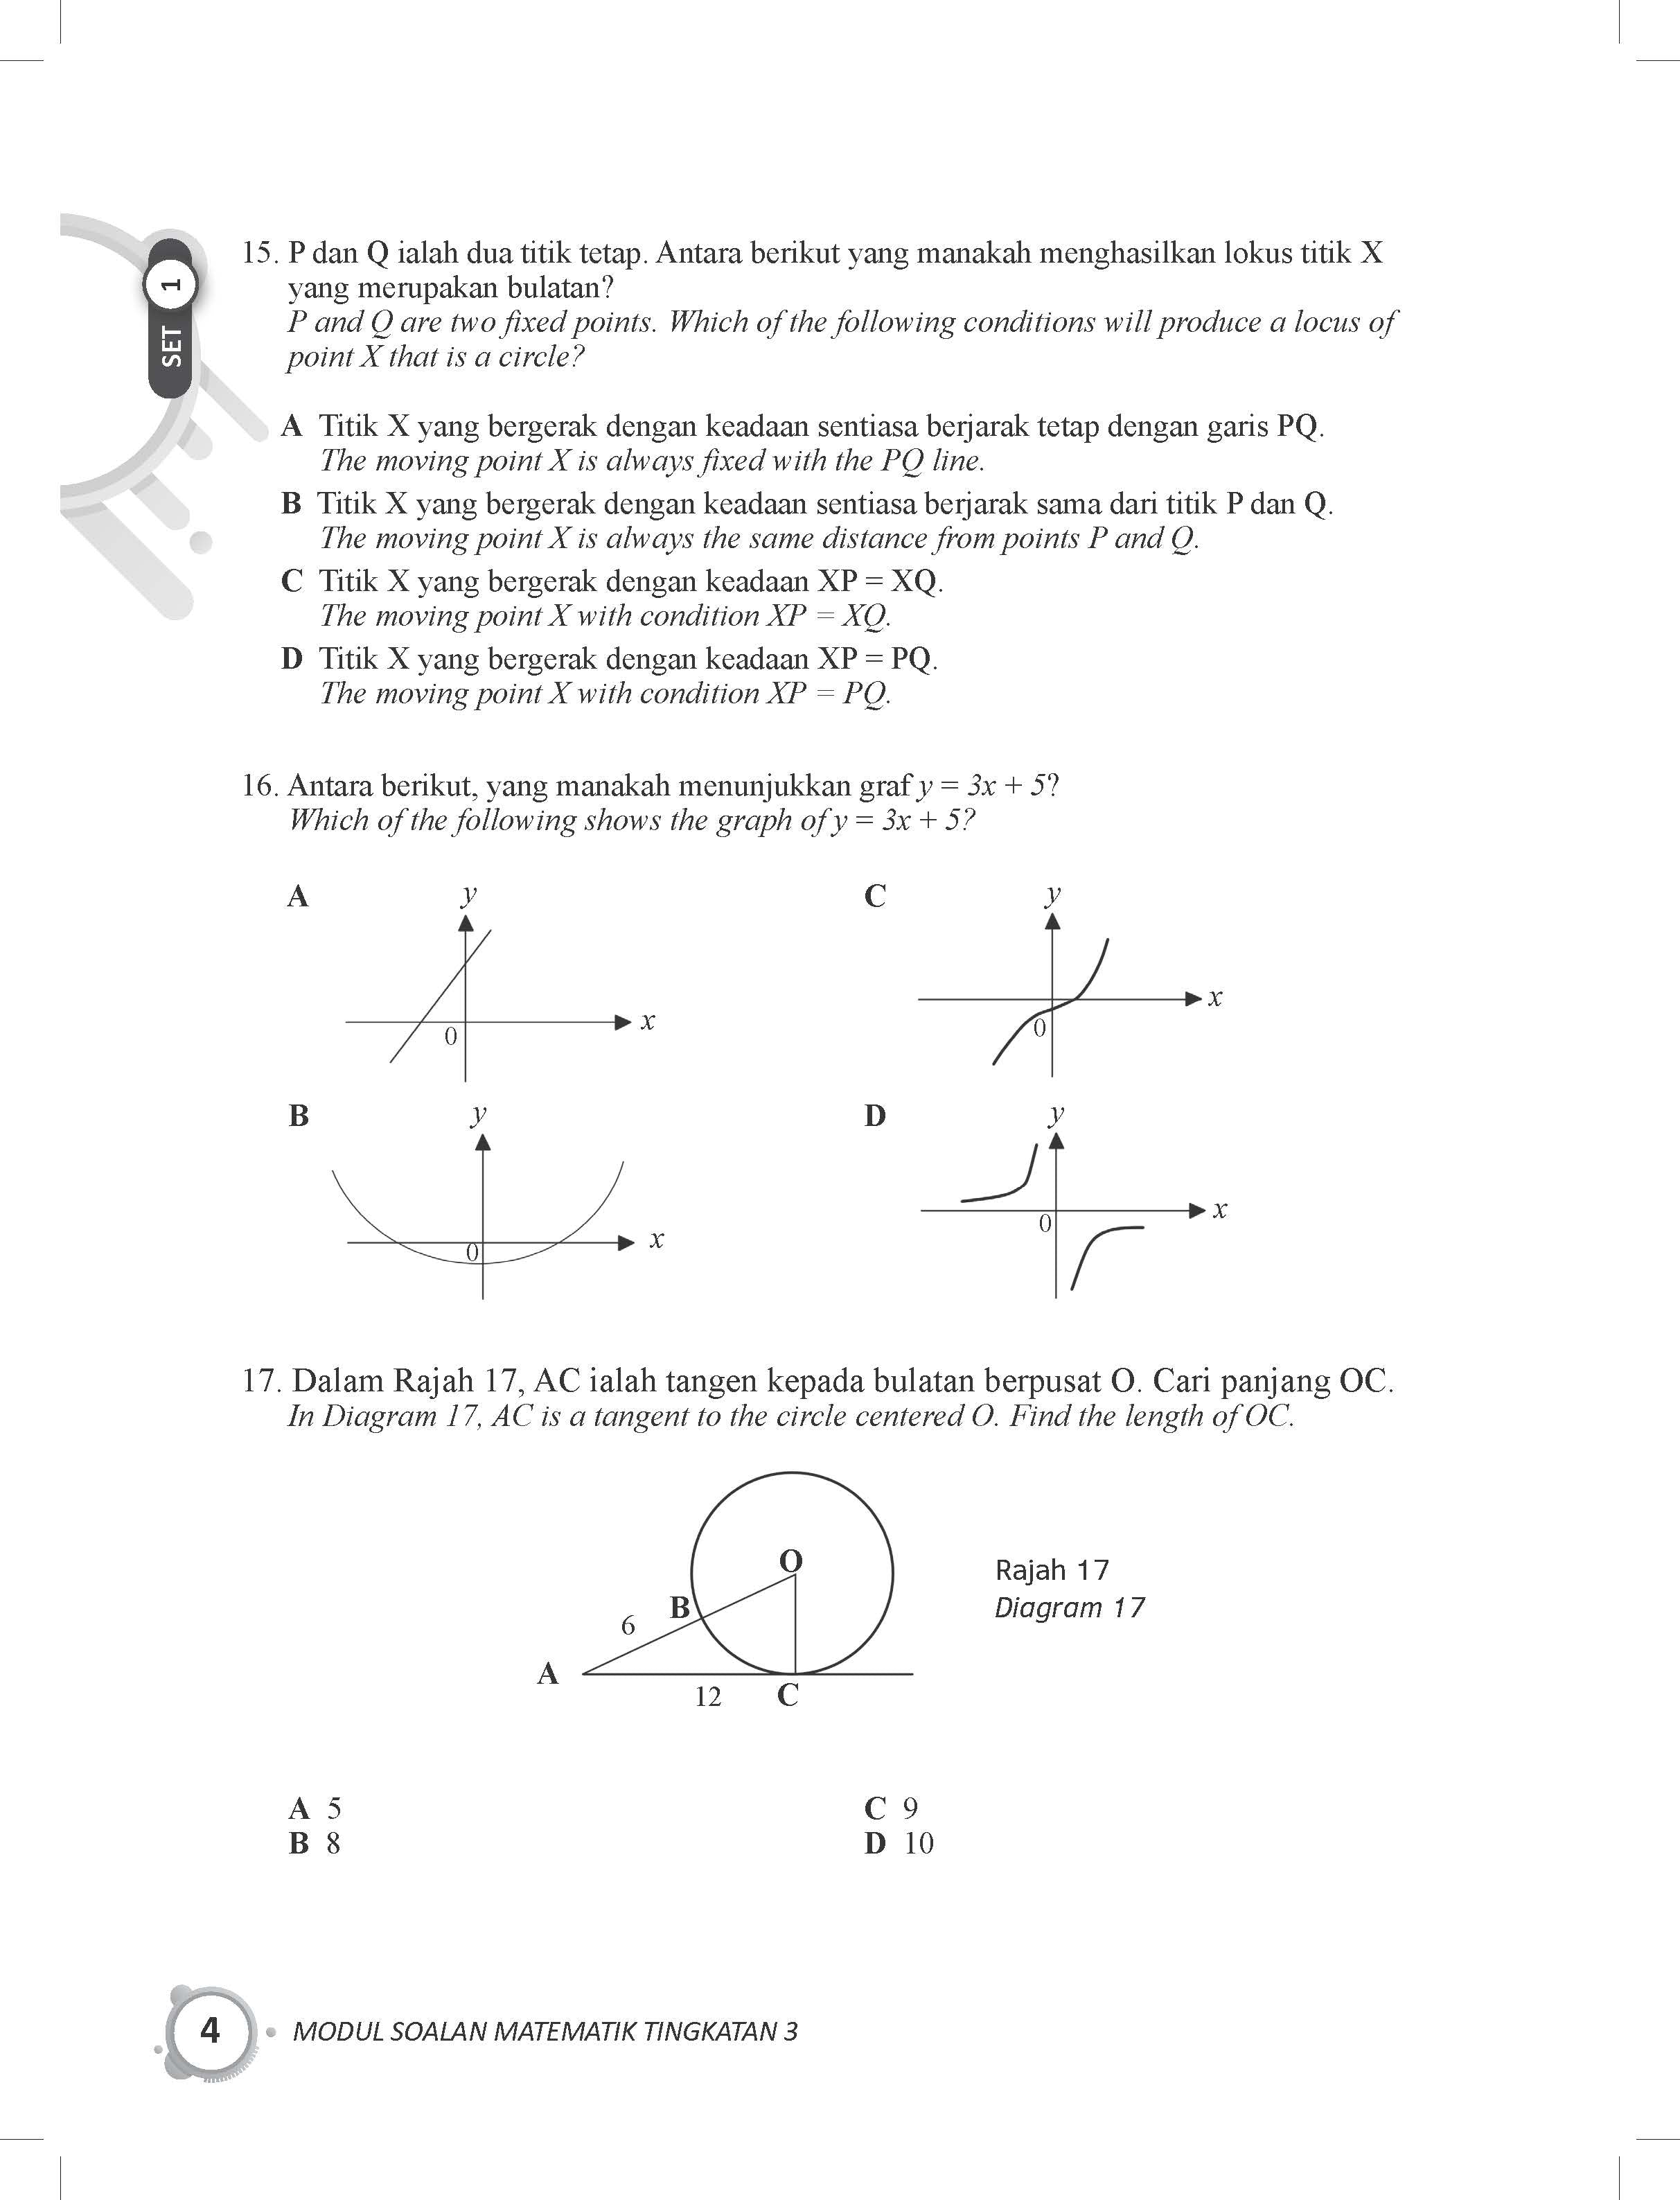 Get Smart Modul Soalan Matematik Tingkatan 3 - (TBBS1168)